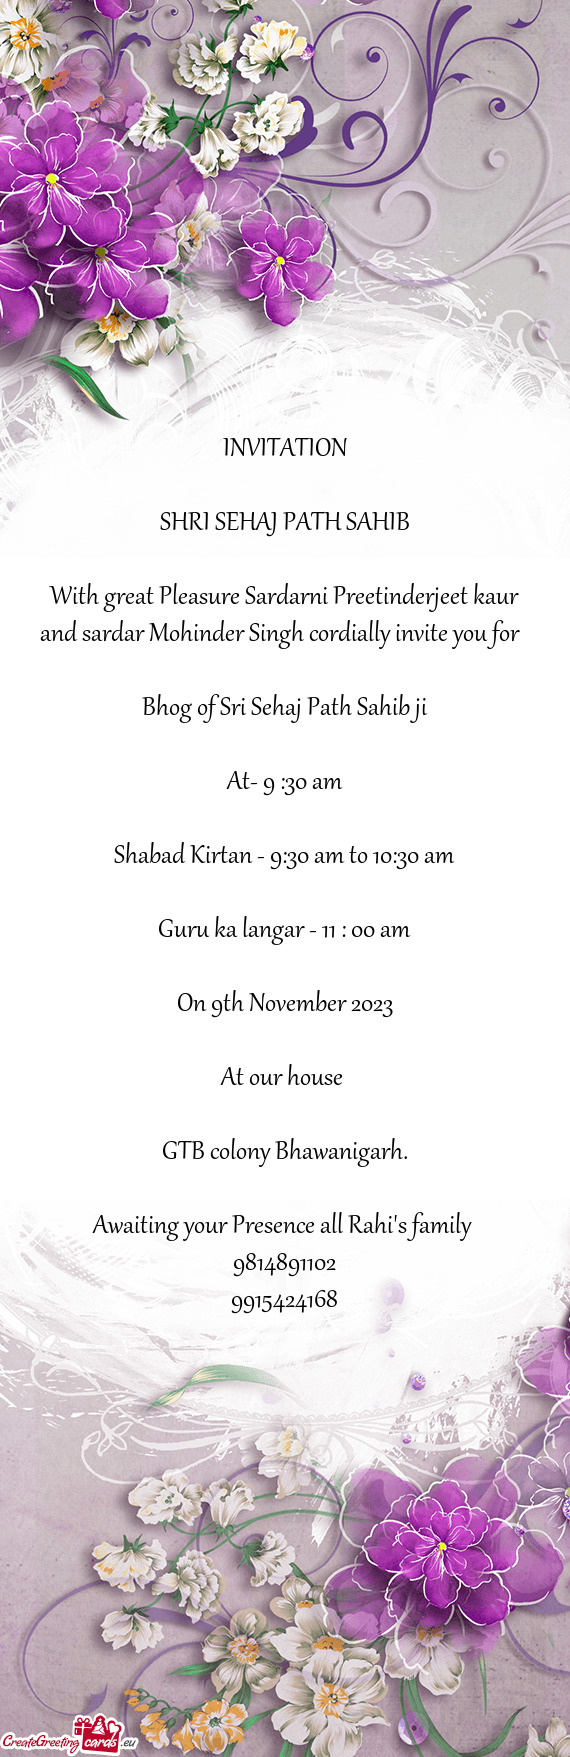 With great Pleasure Sardarni Preetinderjeet kaur and sardar Mohinder Singh cordially invite you for